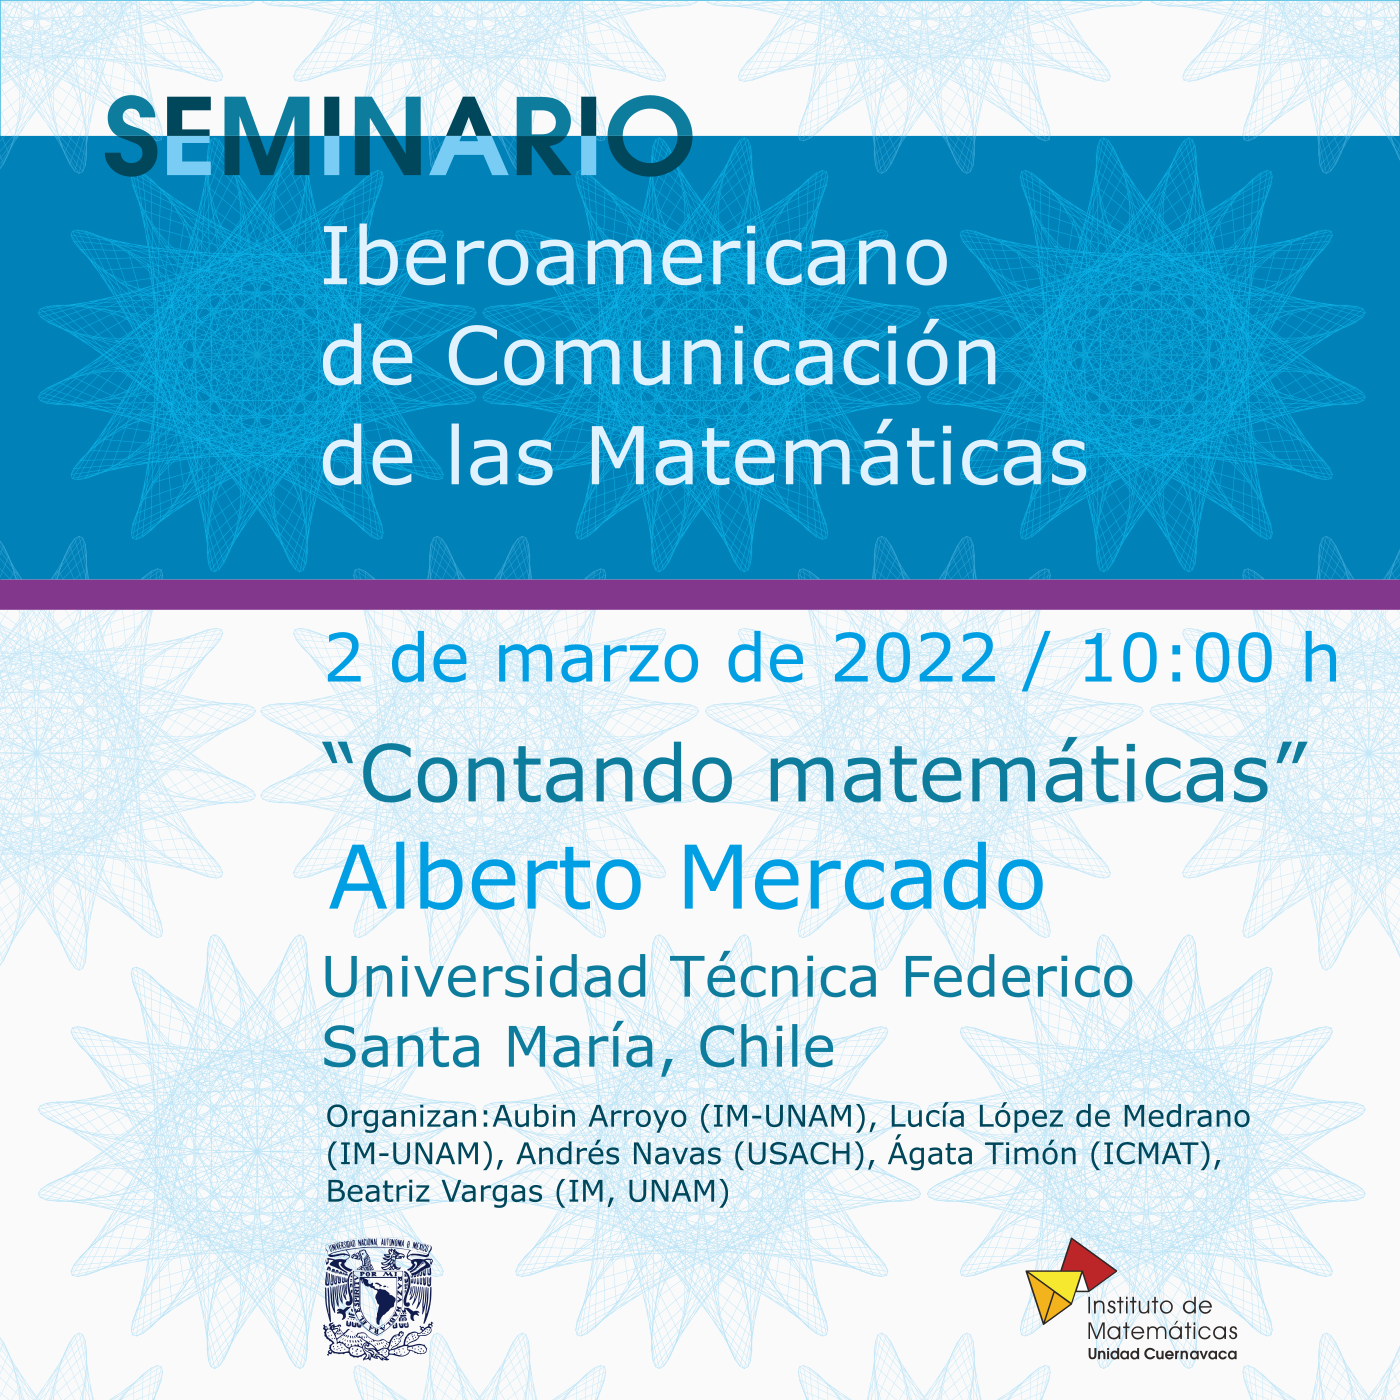 Seminario Iberoamericano de Comunicación de las Matemáticas / 2 de marzo de 2022